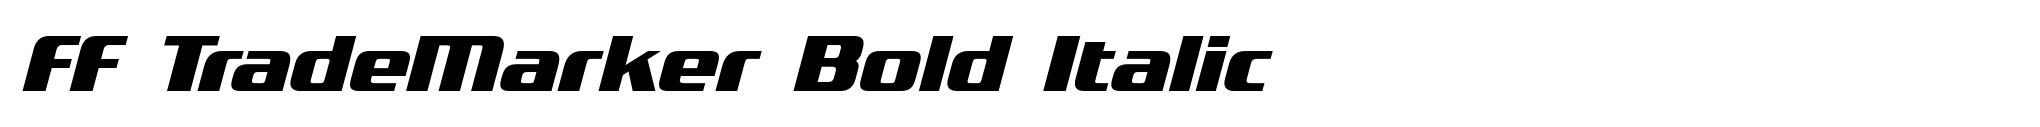 FF TradeMarker Bold Italic image